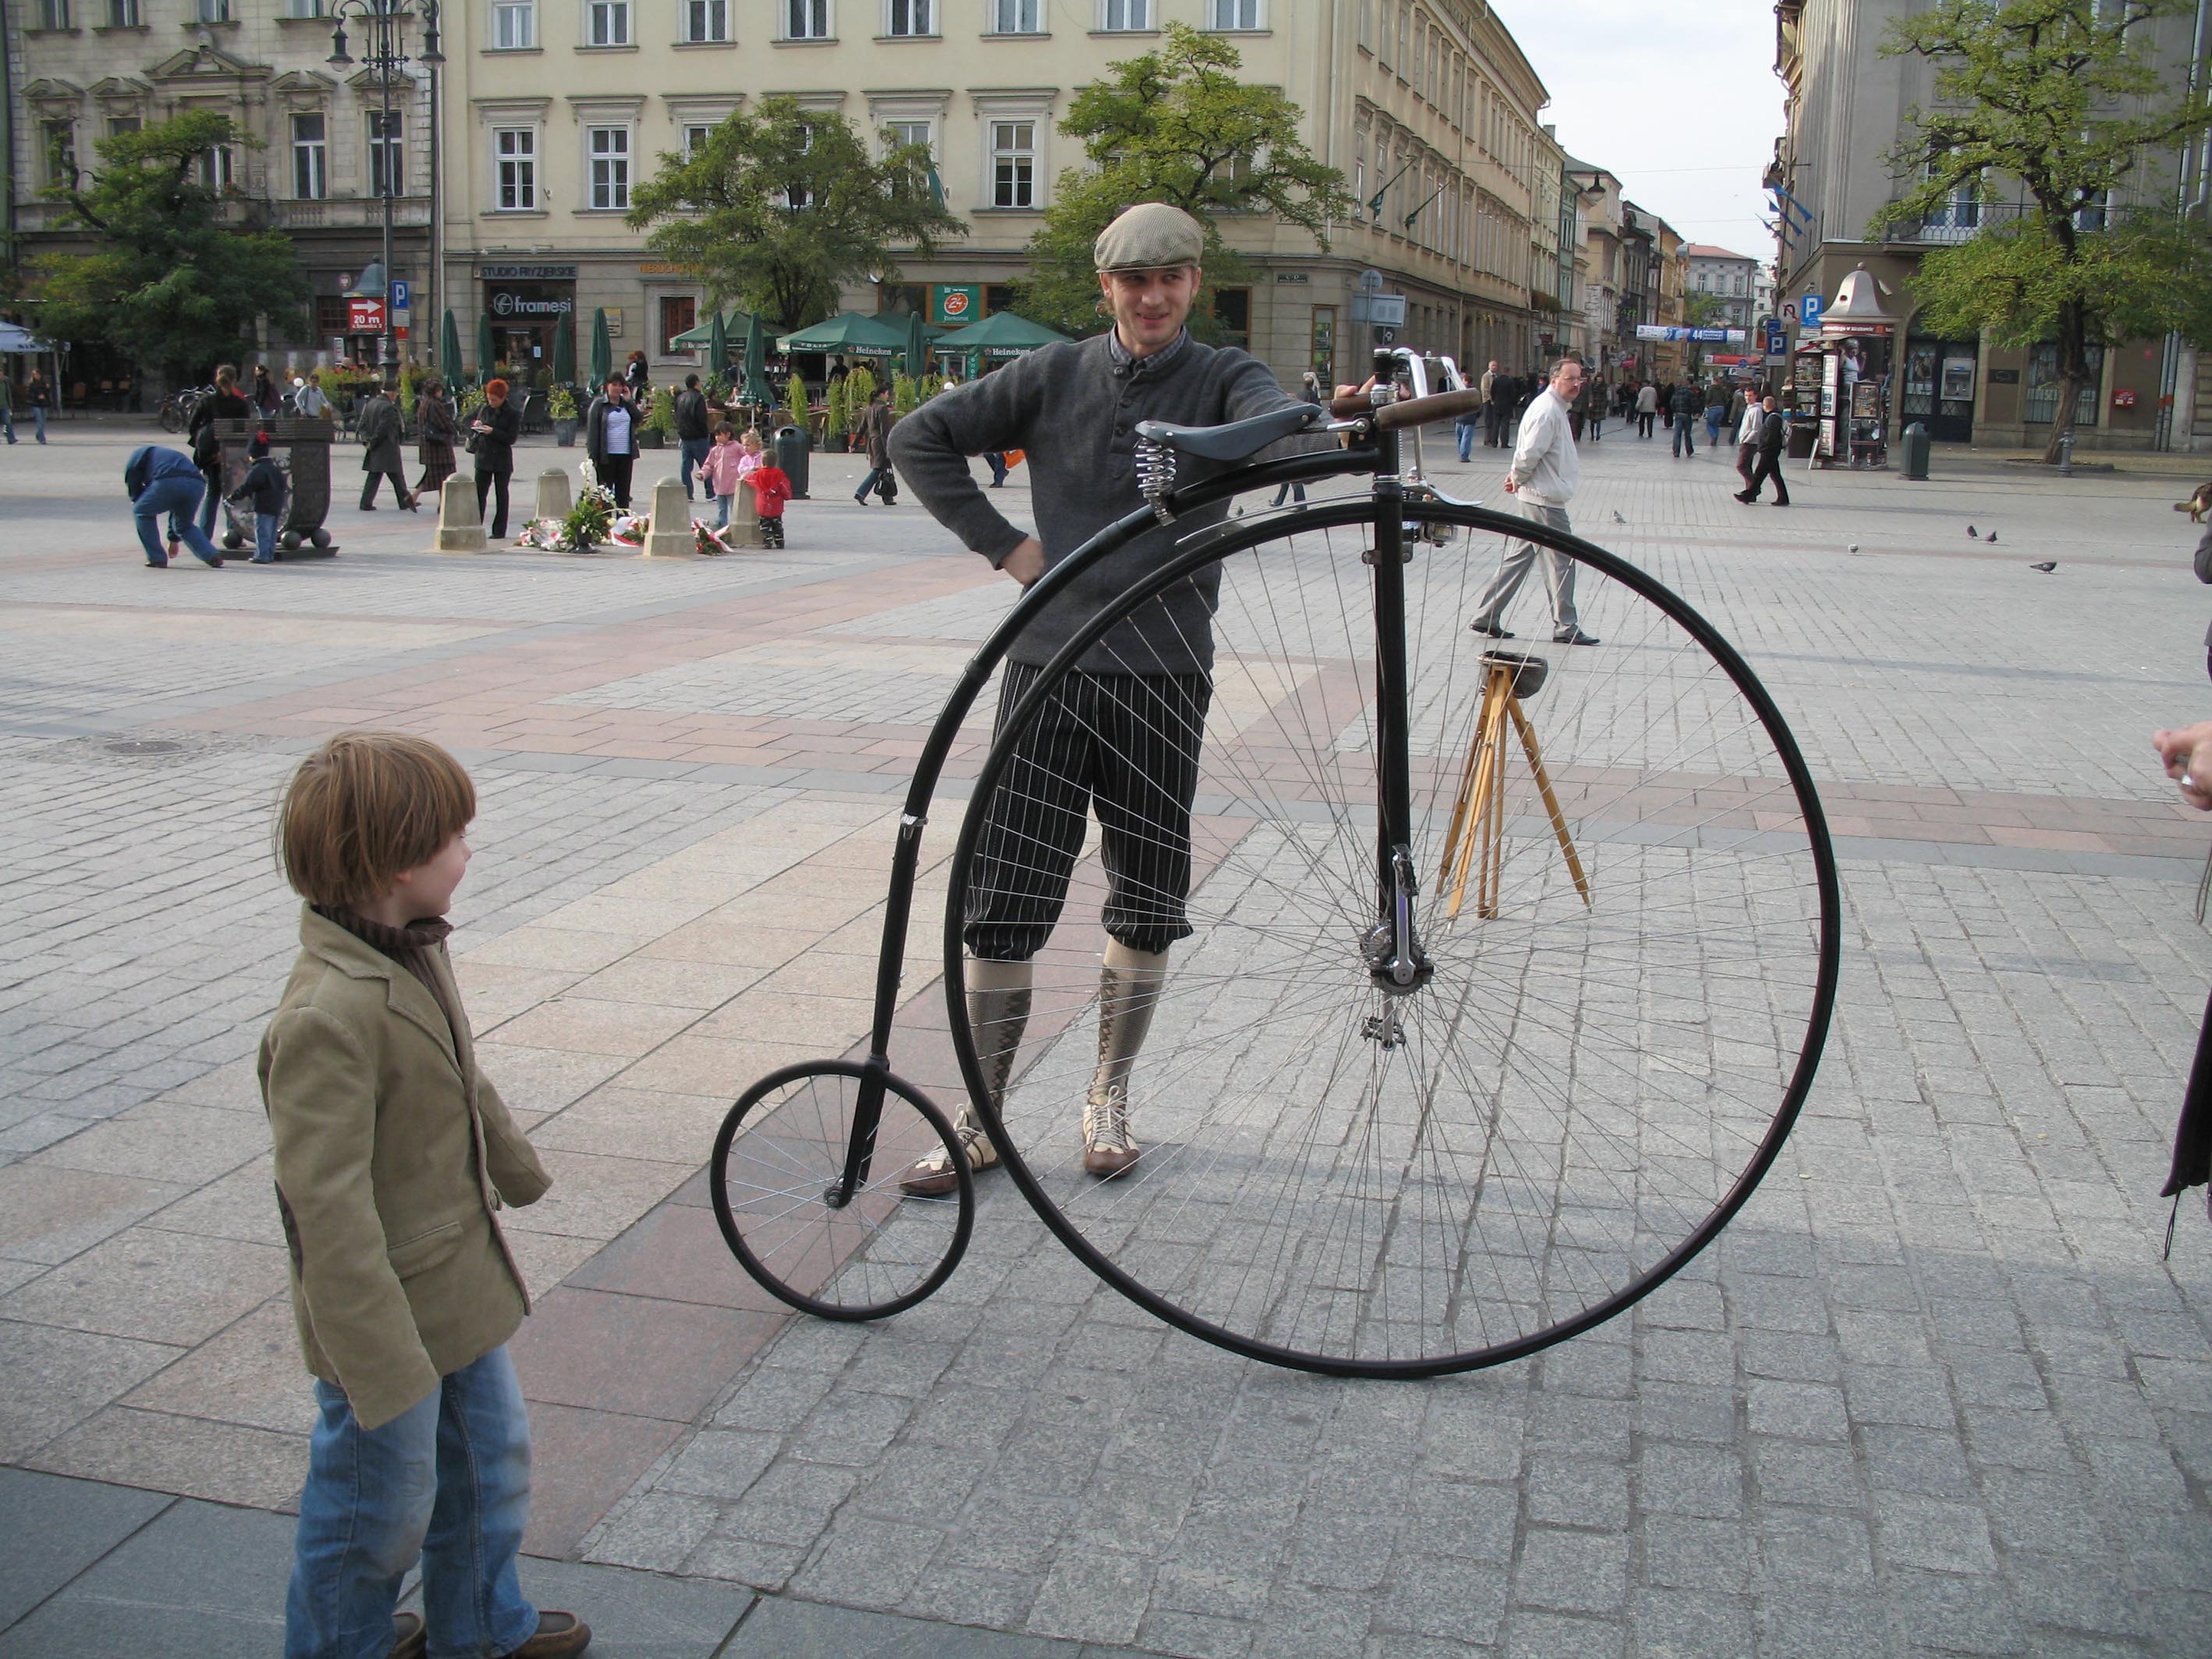 File:Old bicycle in Kraków.jpg - Wikimedia Commons